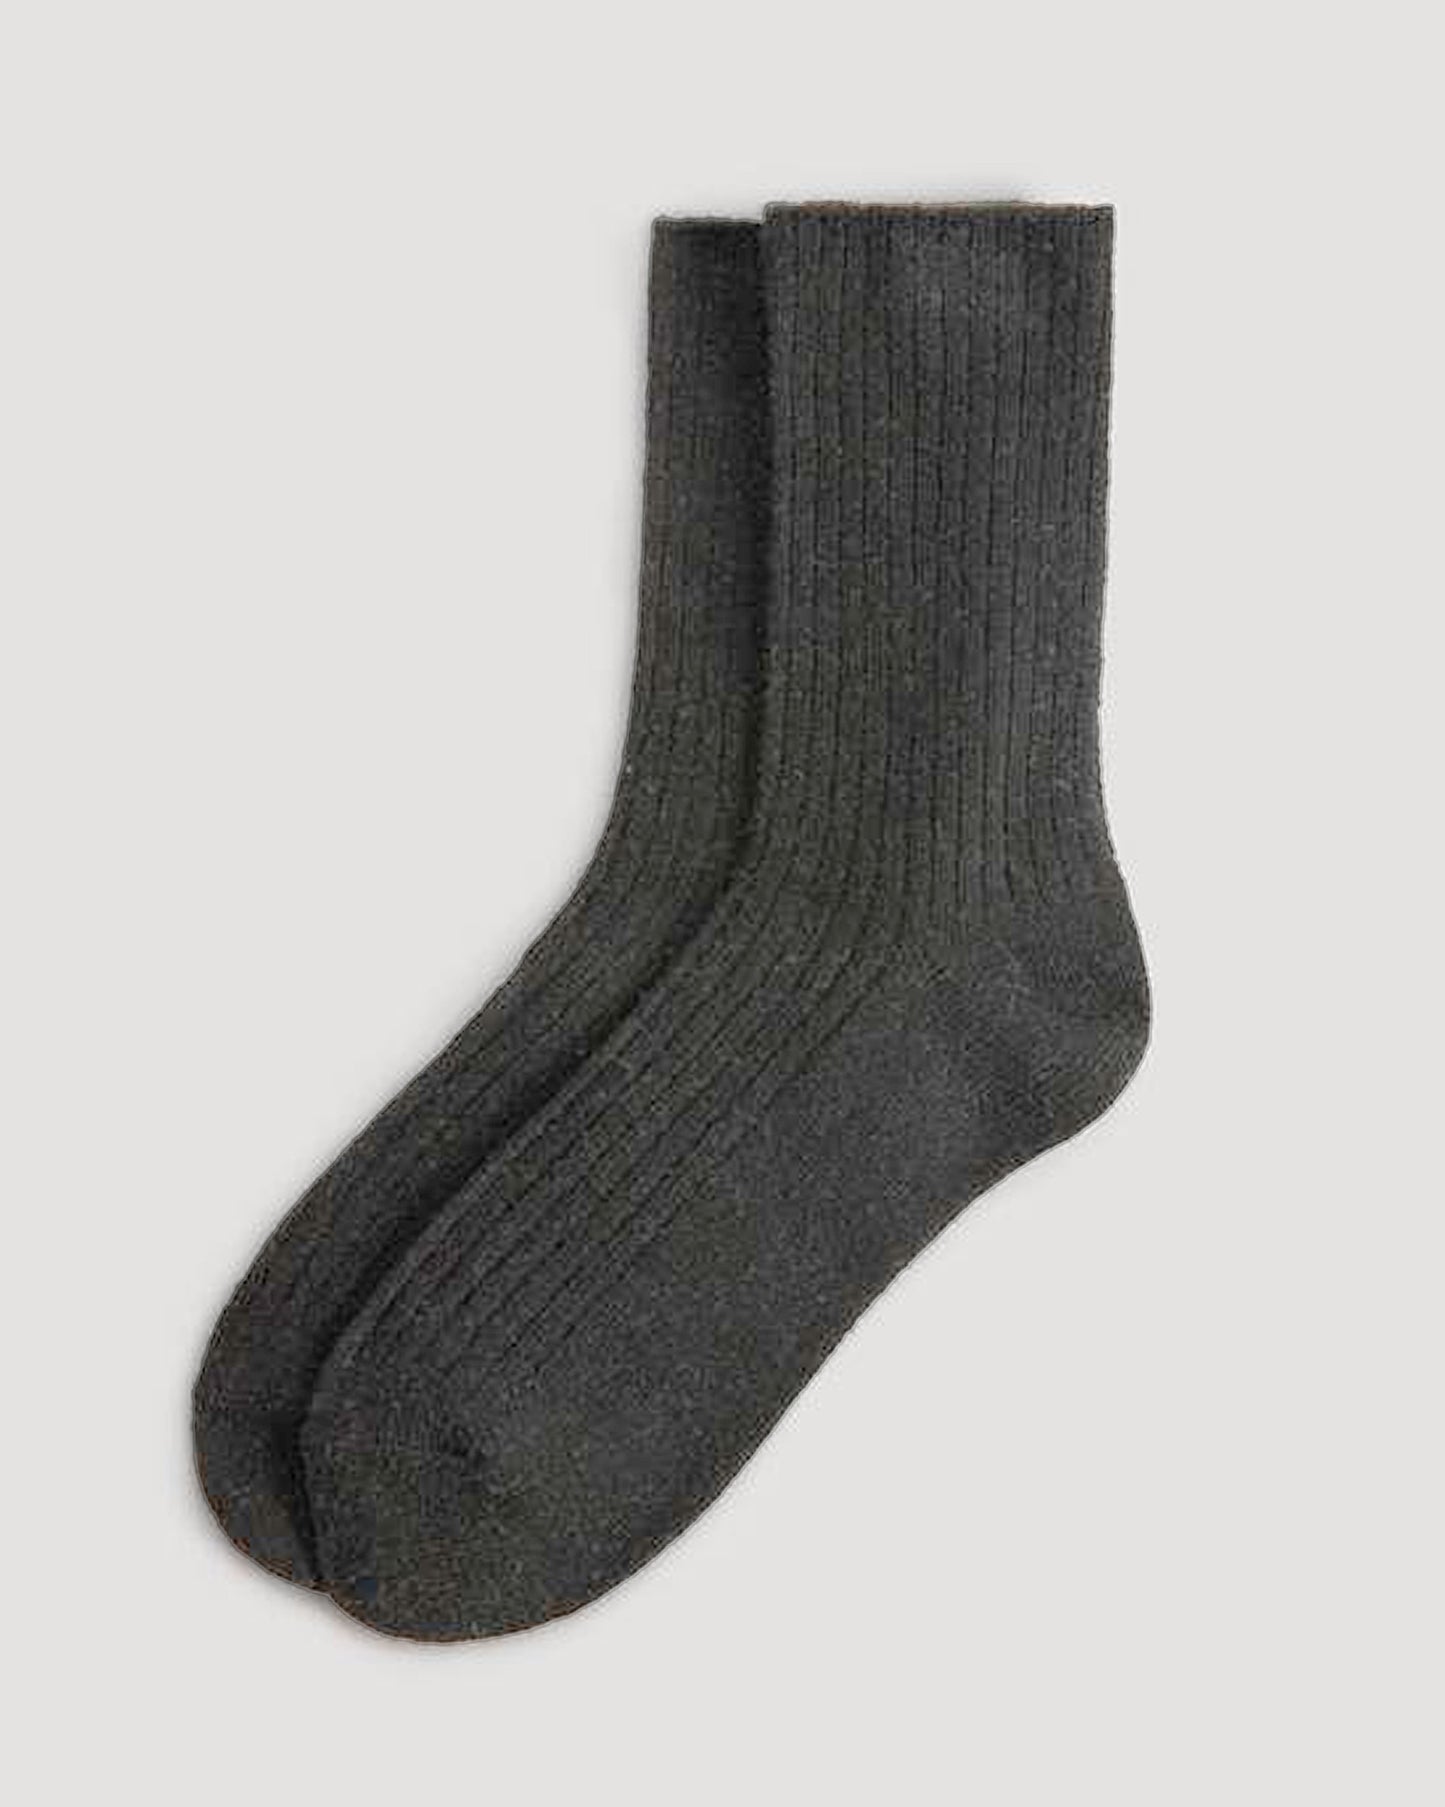 Ysabel Mora 12853 No Cuff Wool Sock - Dark grey soft and warm wool ribbed knitted thermal socks with no cuff, shaped heel and flat toe seam.